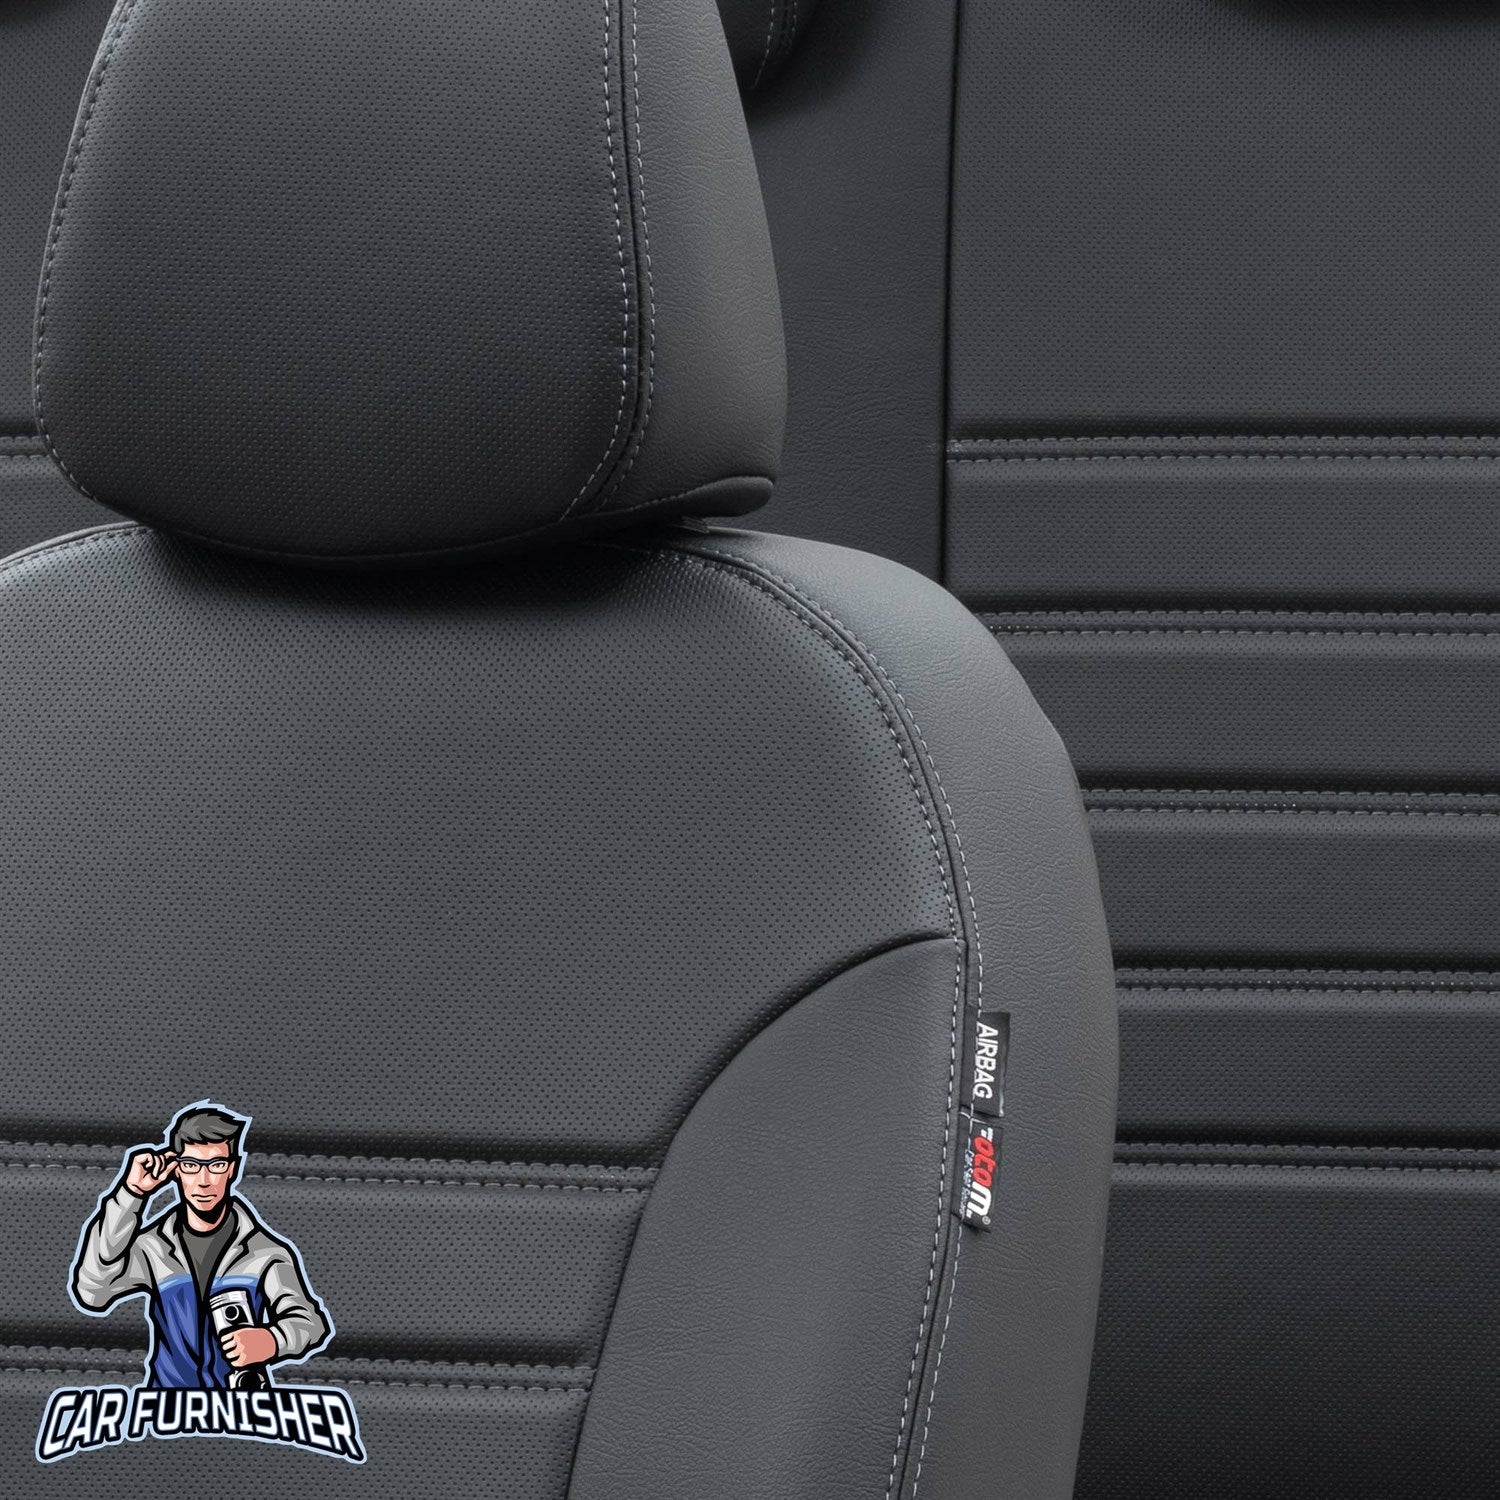 Mitsubishi ASX Seat Covers Istanbul Leather Design Black Leather